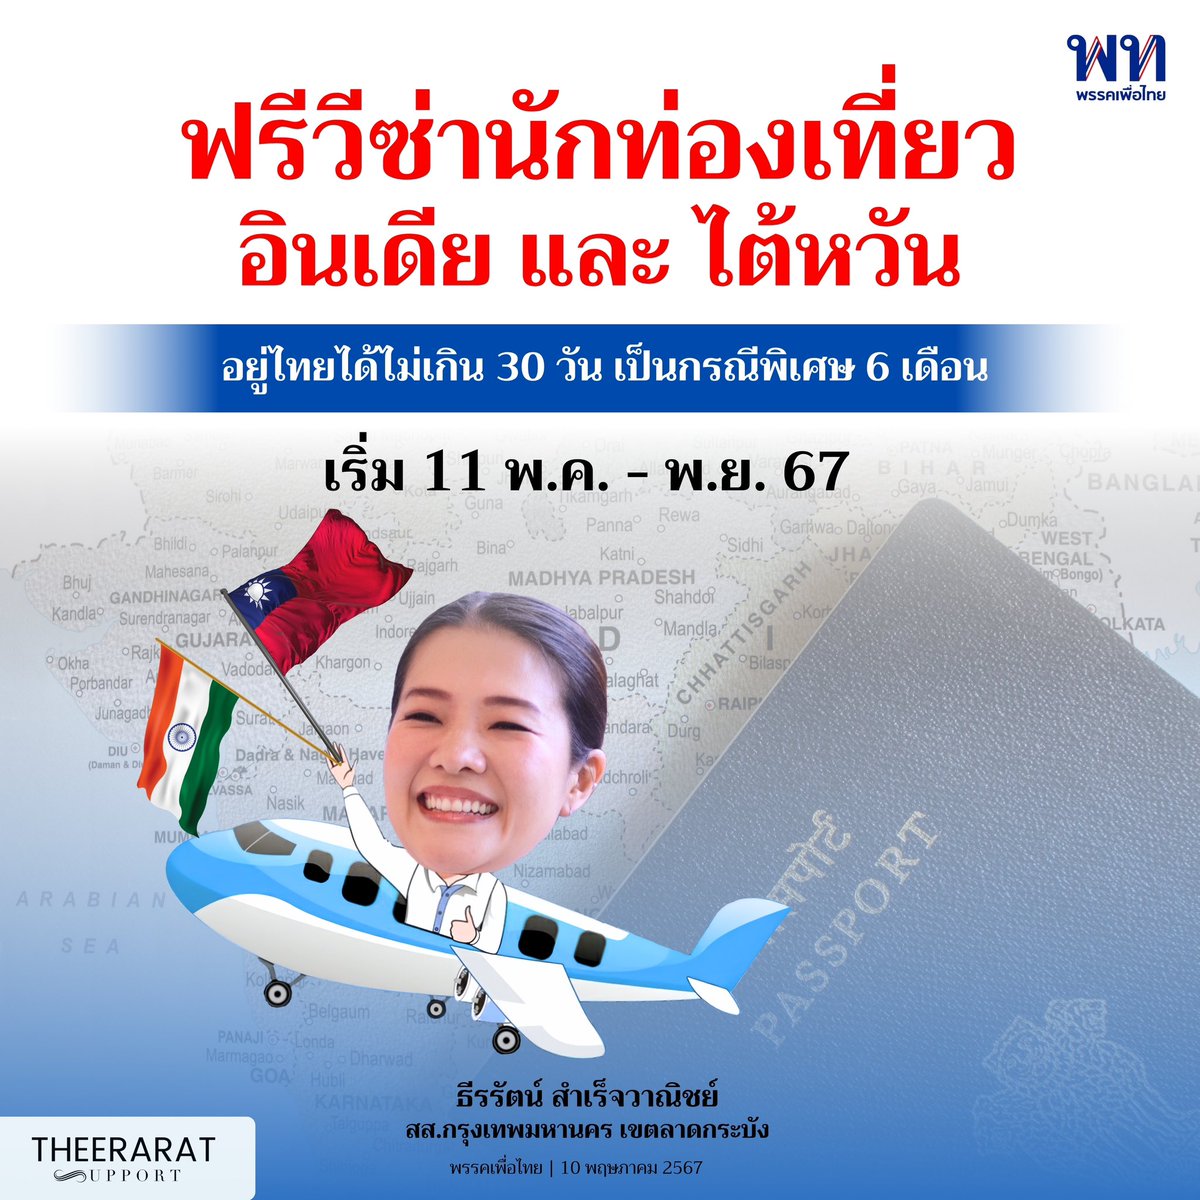 ✈️ เริ่มแล้ว! “วีซ่าฟรี” ให้นักท่องเที่ยวอินเดียและไต้หวัน ตั้งแต่วันที่ 11 พ.ค.  – 11 พ.ย. 2567 ให้อยู่ประเทศไทยได้ไม่เกิน 30 วัน เป็นกรณีพิเศษ 6 เดือน 

#ธีรรัตน์สำเร็จวาณิชย์ 
#พรรคเพื่อไทย